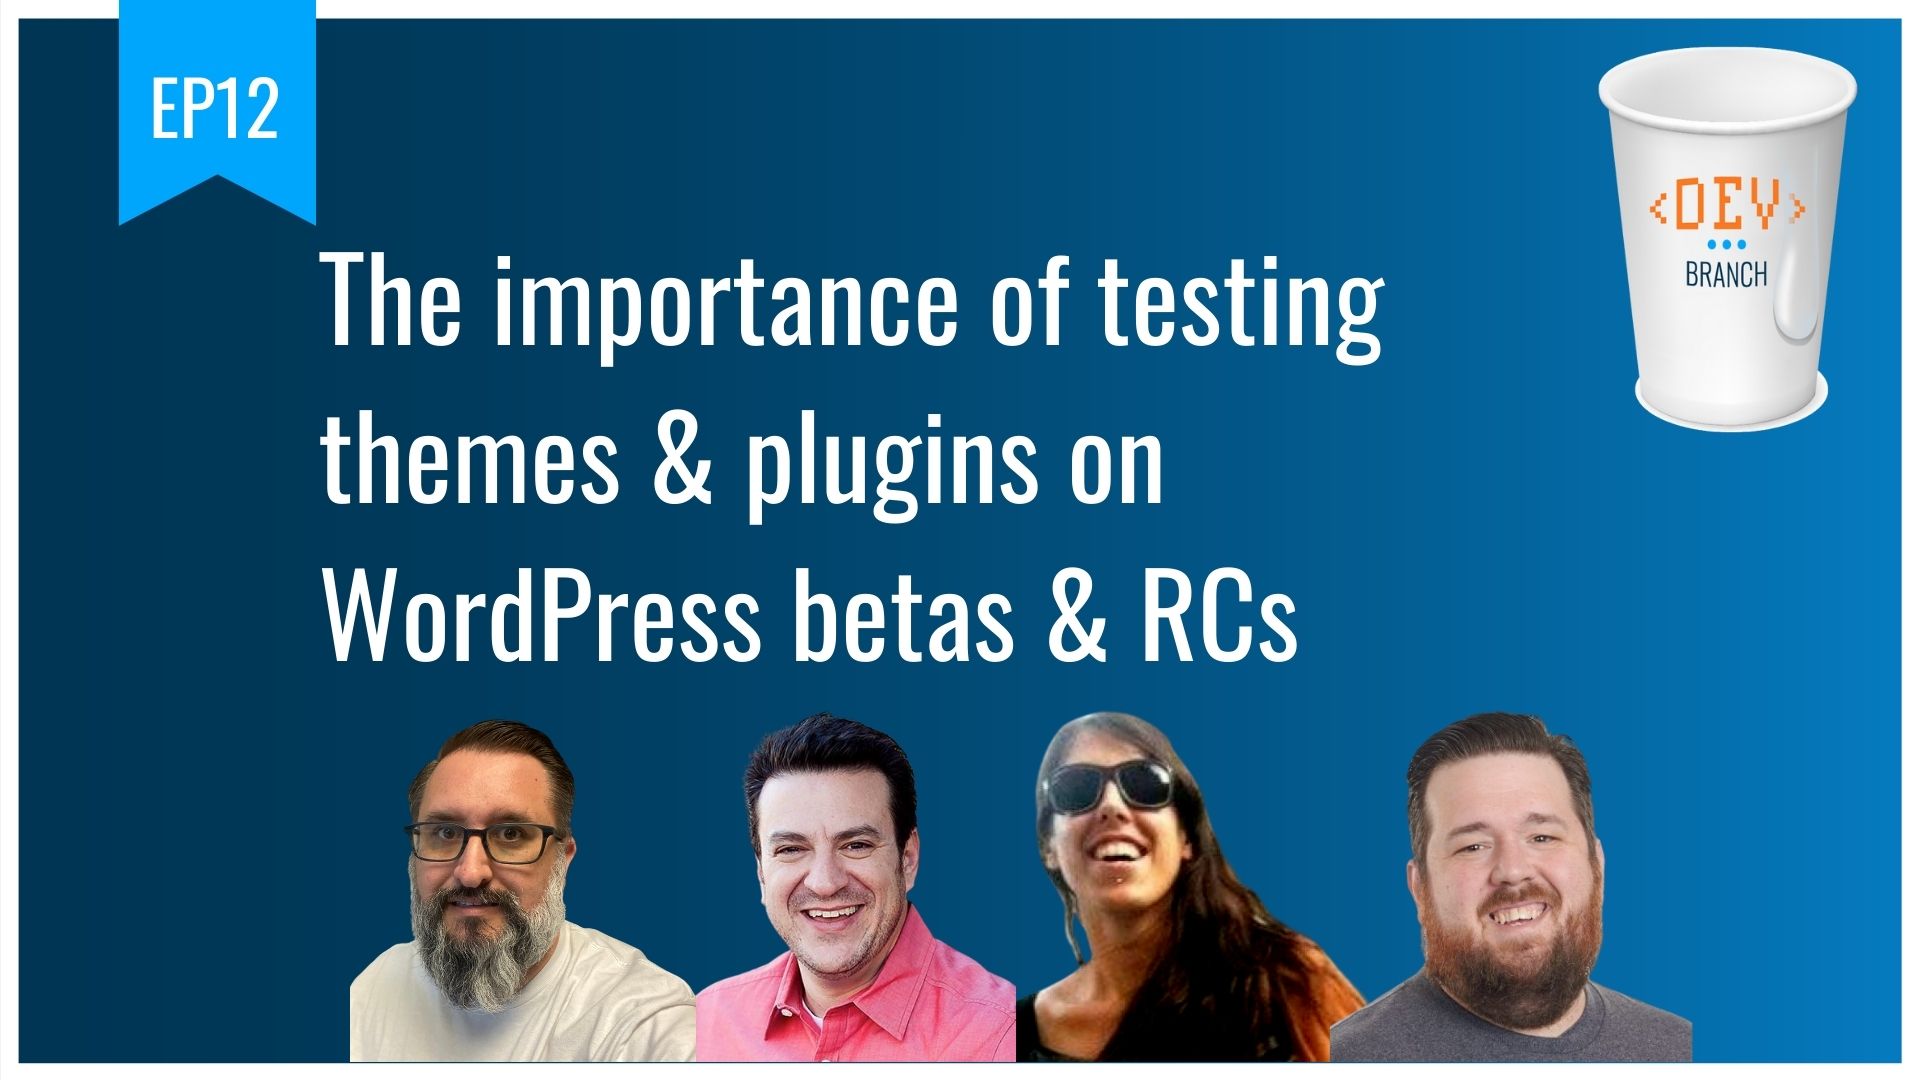 EP12 – The importance of testing themes & plugins on WordPress betas & RCs